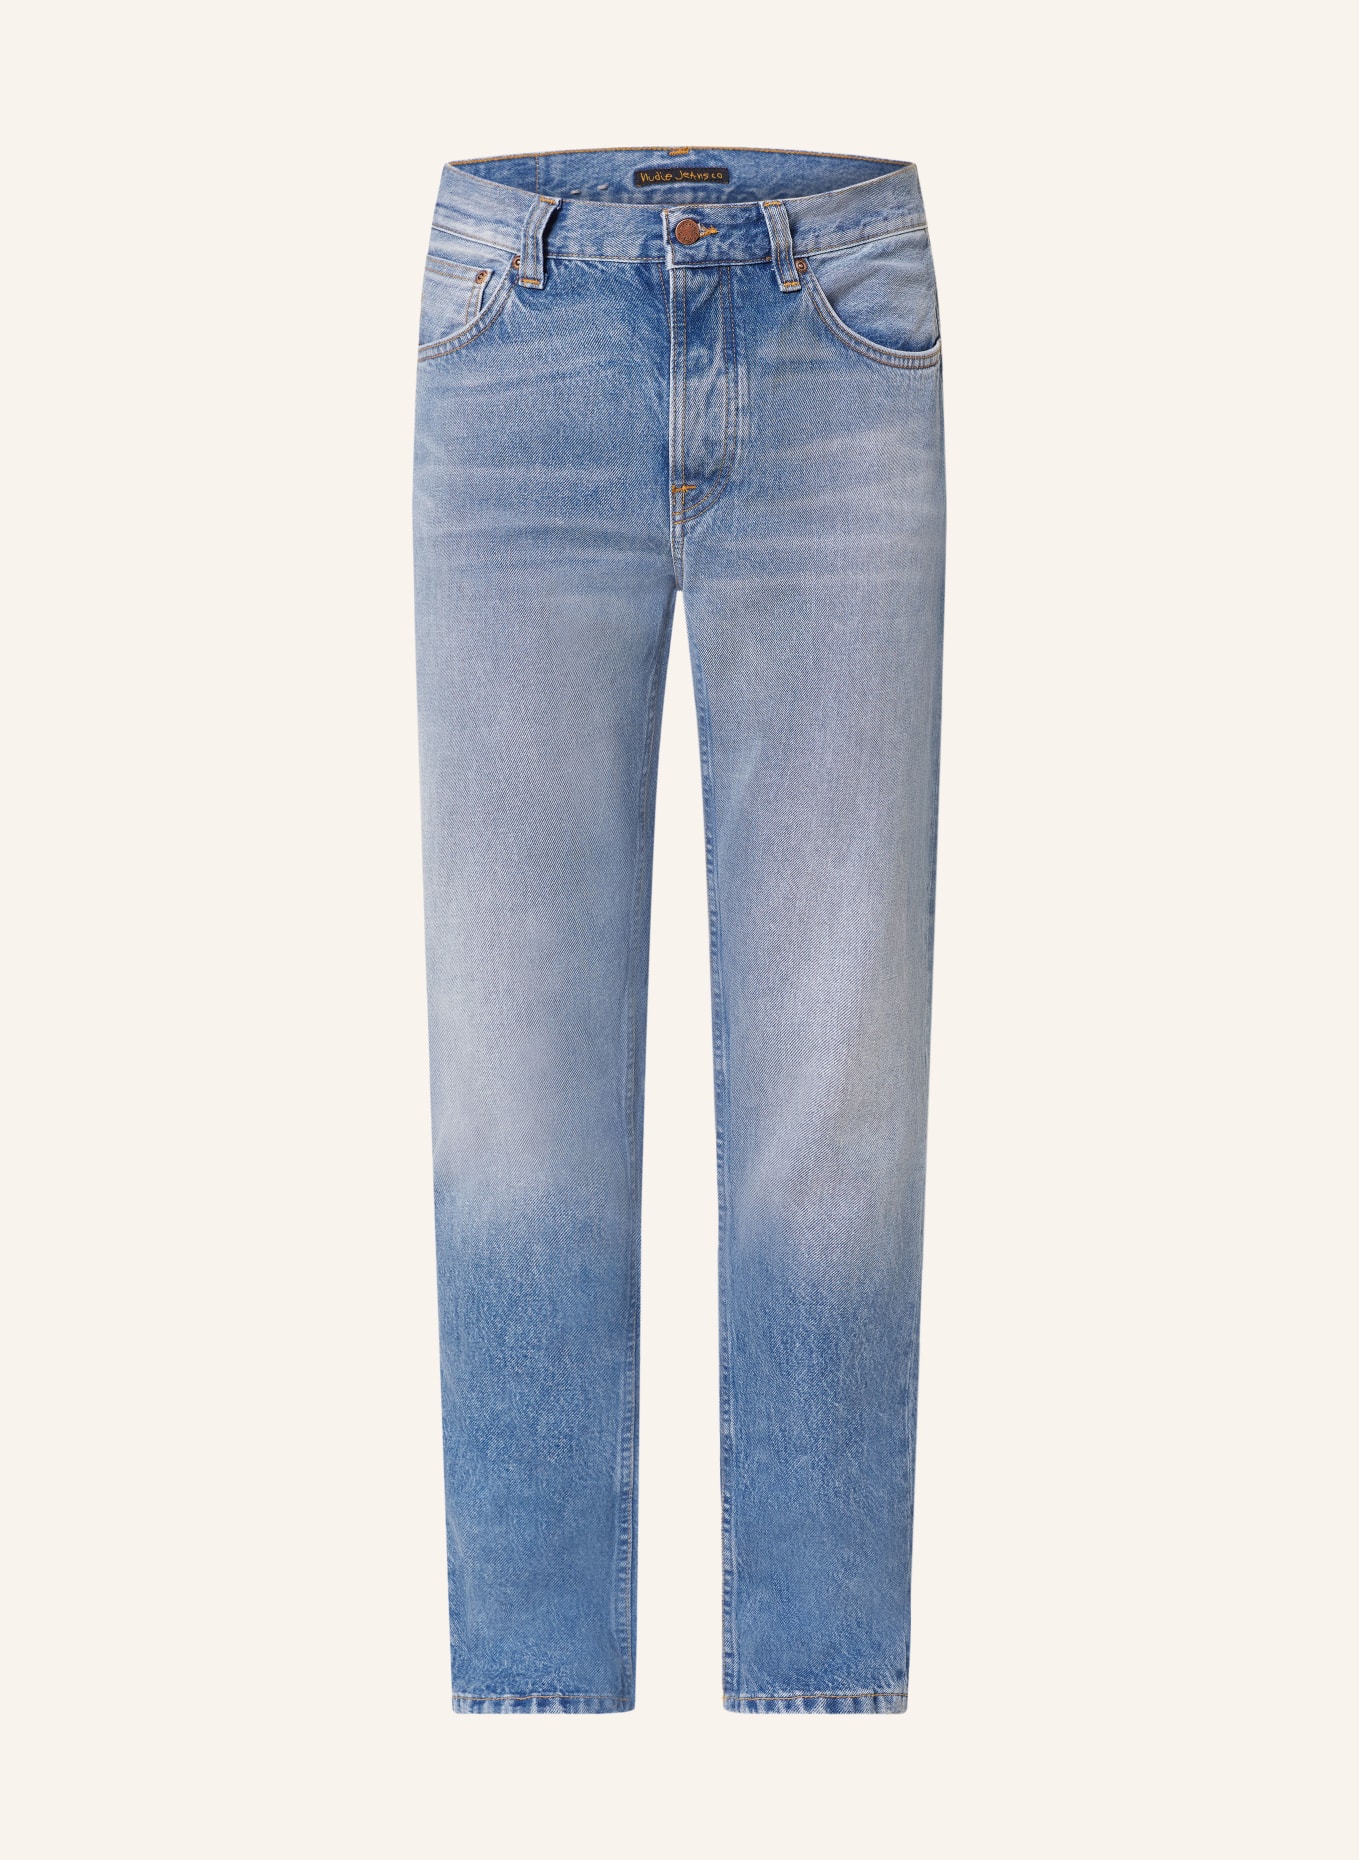 Nudie Jeans Jeans STEADY EDDIE II Extra Slim Fit, Farbe: ALL DAY BLUES (Bild 1)